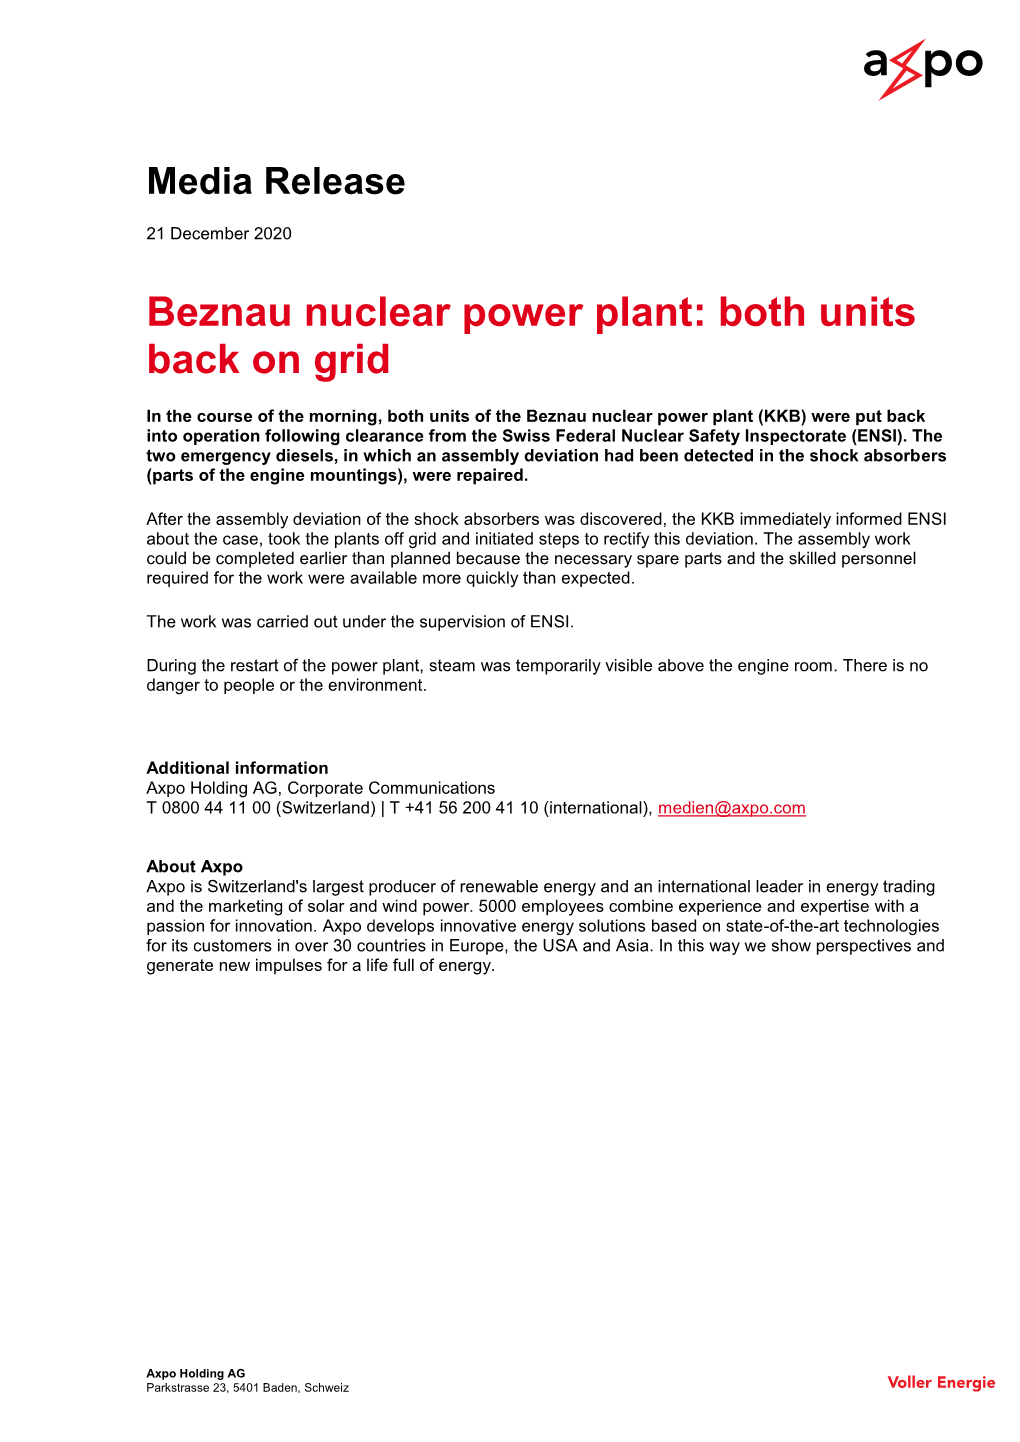 Beznau Nuclear Power Plant: Both Units Back on Grid